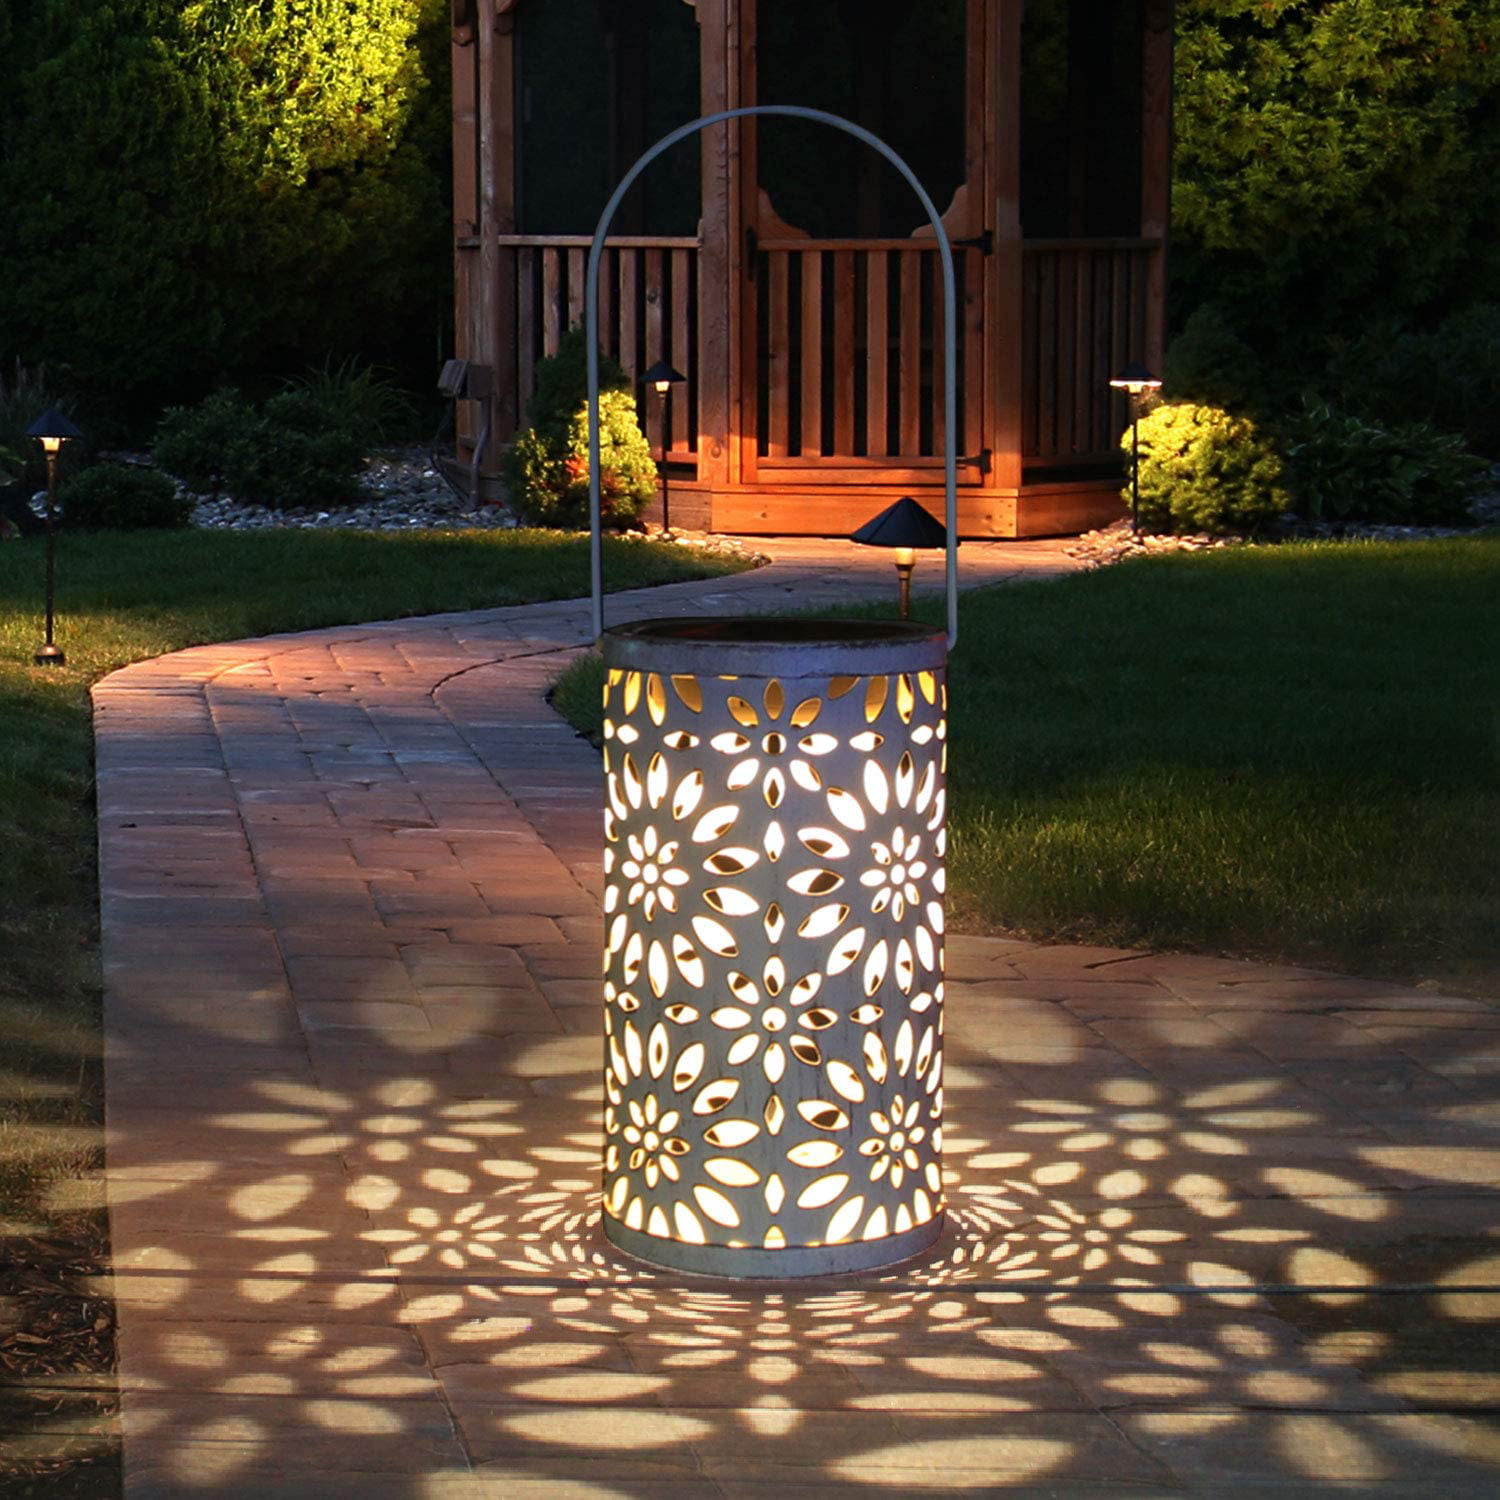 Moroccan Silhouette Forest Solar Table Lantern Uonlytech Solar Hanging Lantern Outdoor Hanging Light for Patio Courtyard Garden 2Pcs 